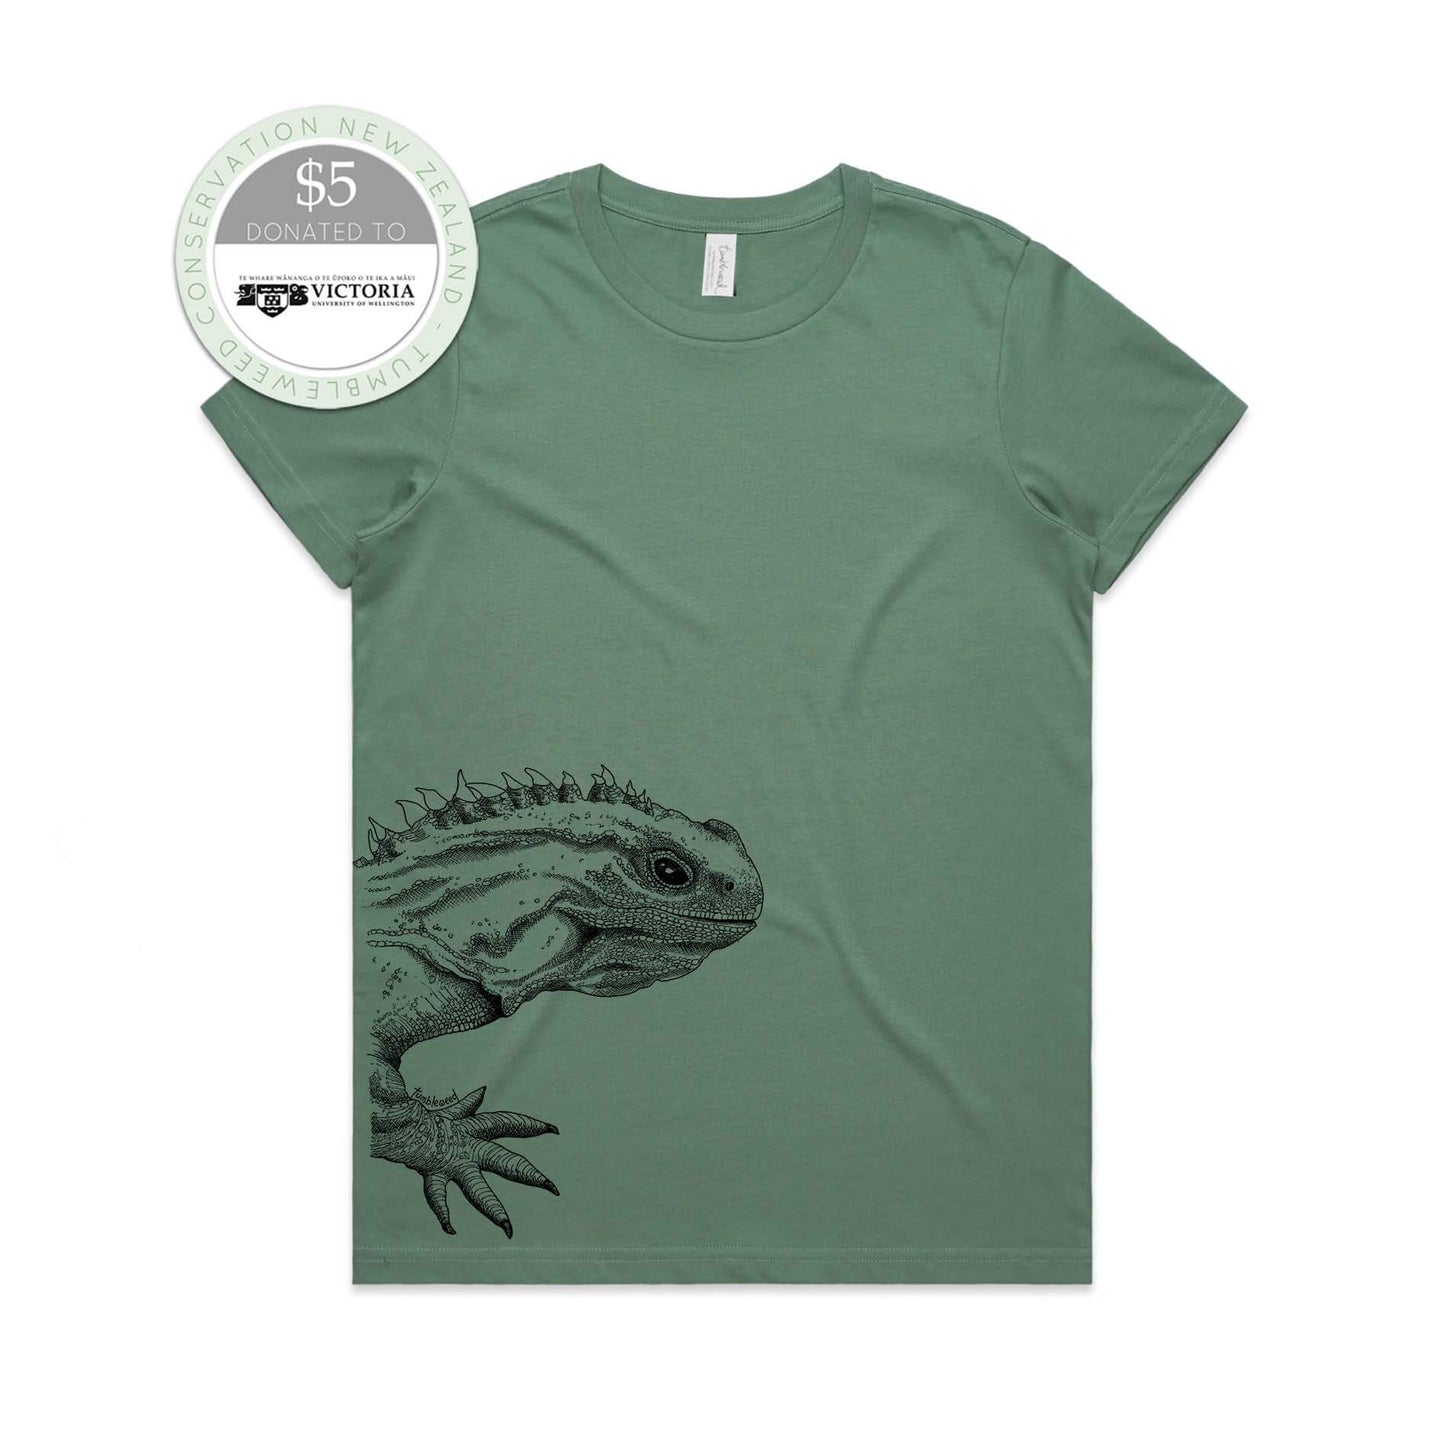 Sage, female t-shirt featuring a screen printed Tuatara design.